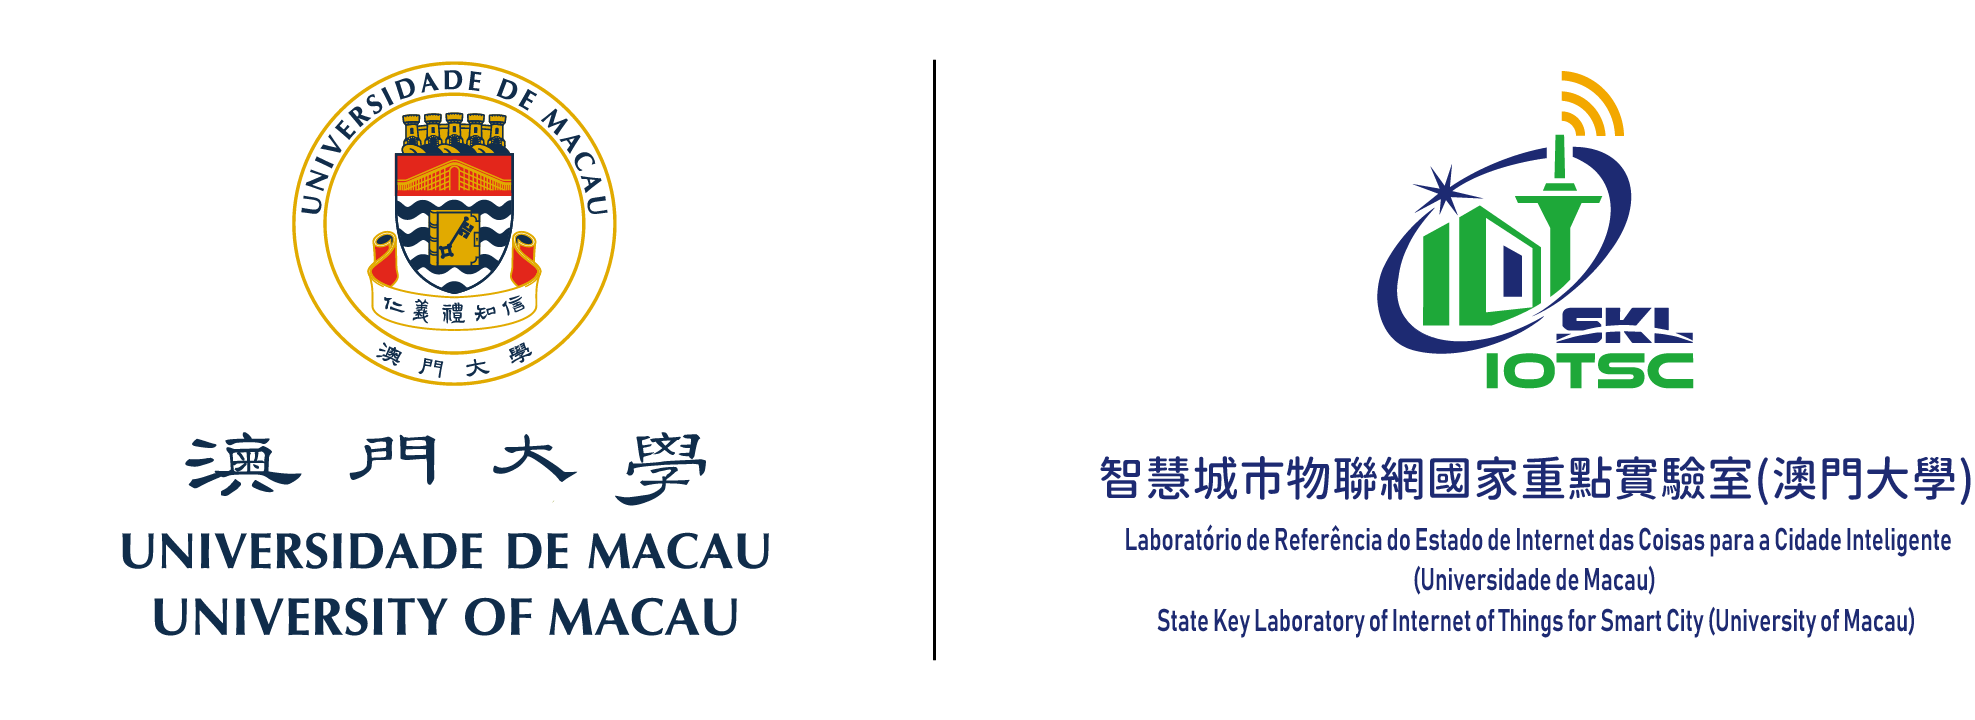 State Key Laboratory of Internet of Things for Smart City | University of Macau Logo